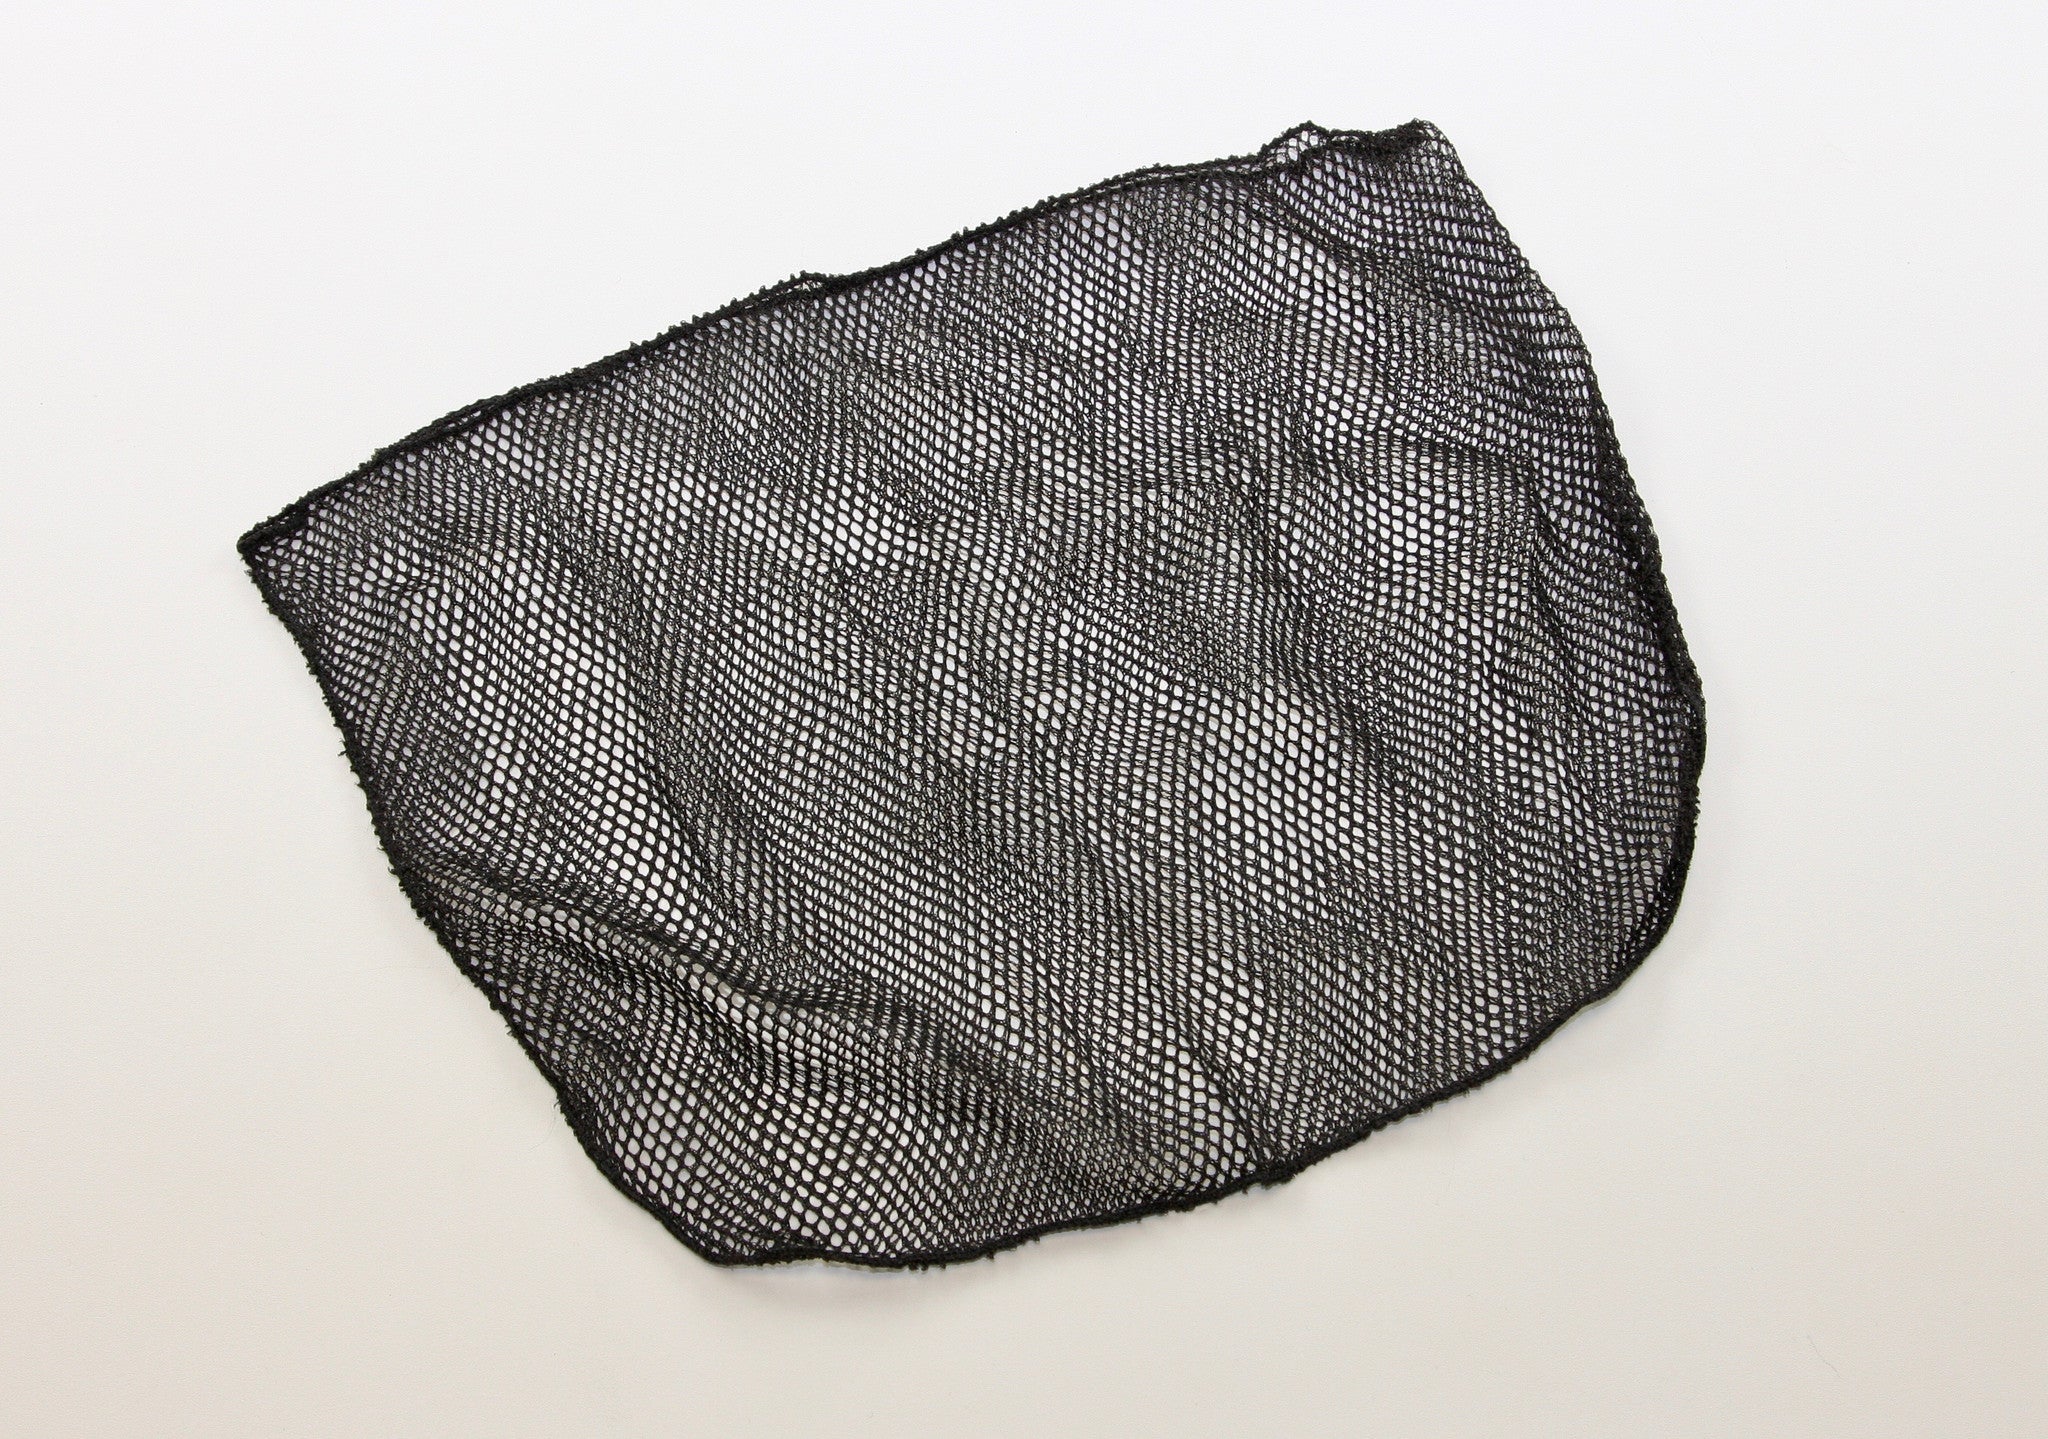 Fishing Net, Standard Nylon Replacement Net Bag, Fishing Landing